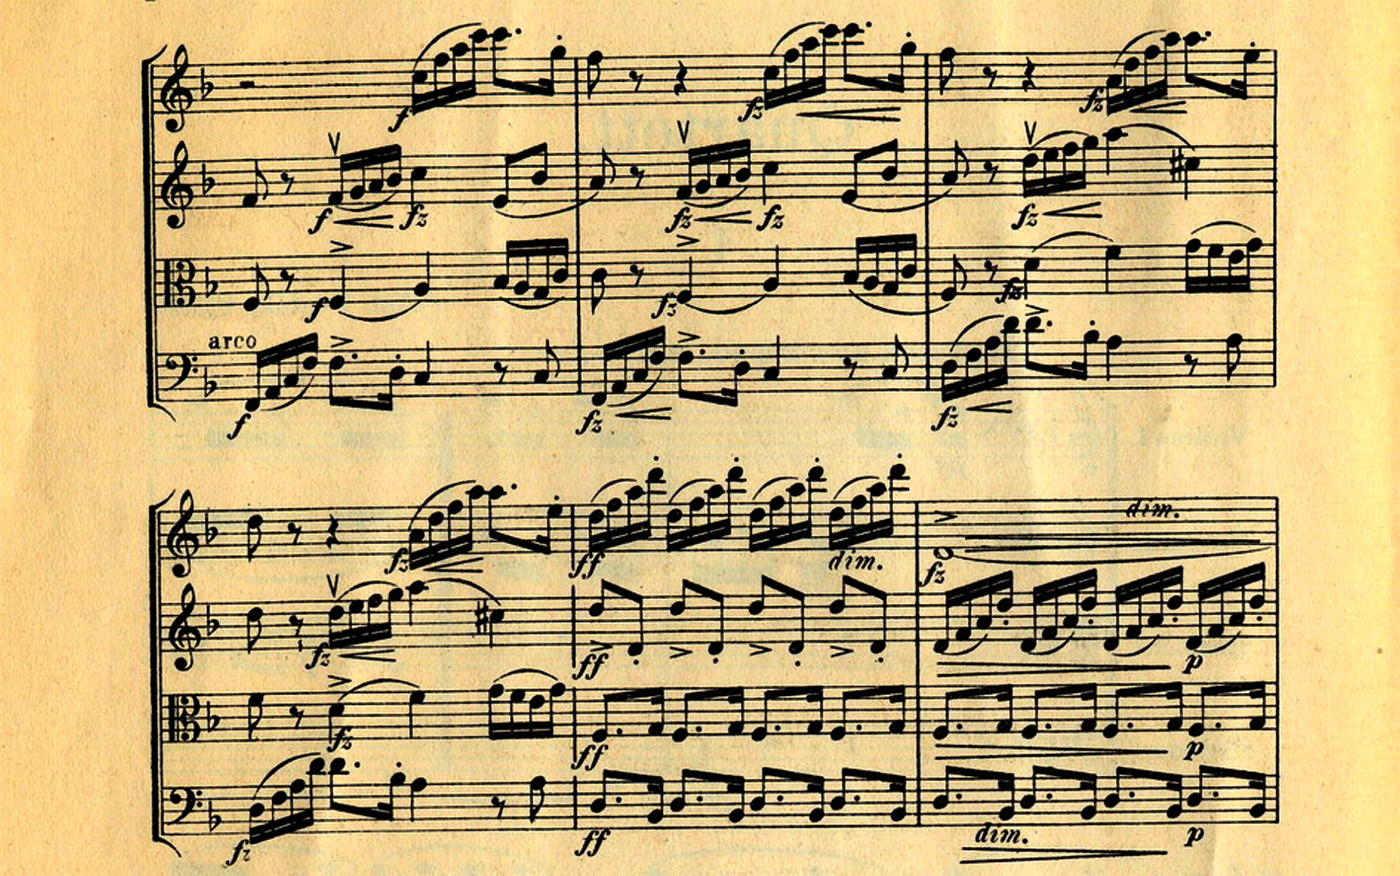 musical-notes-sheet